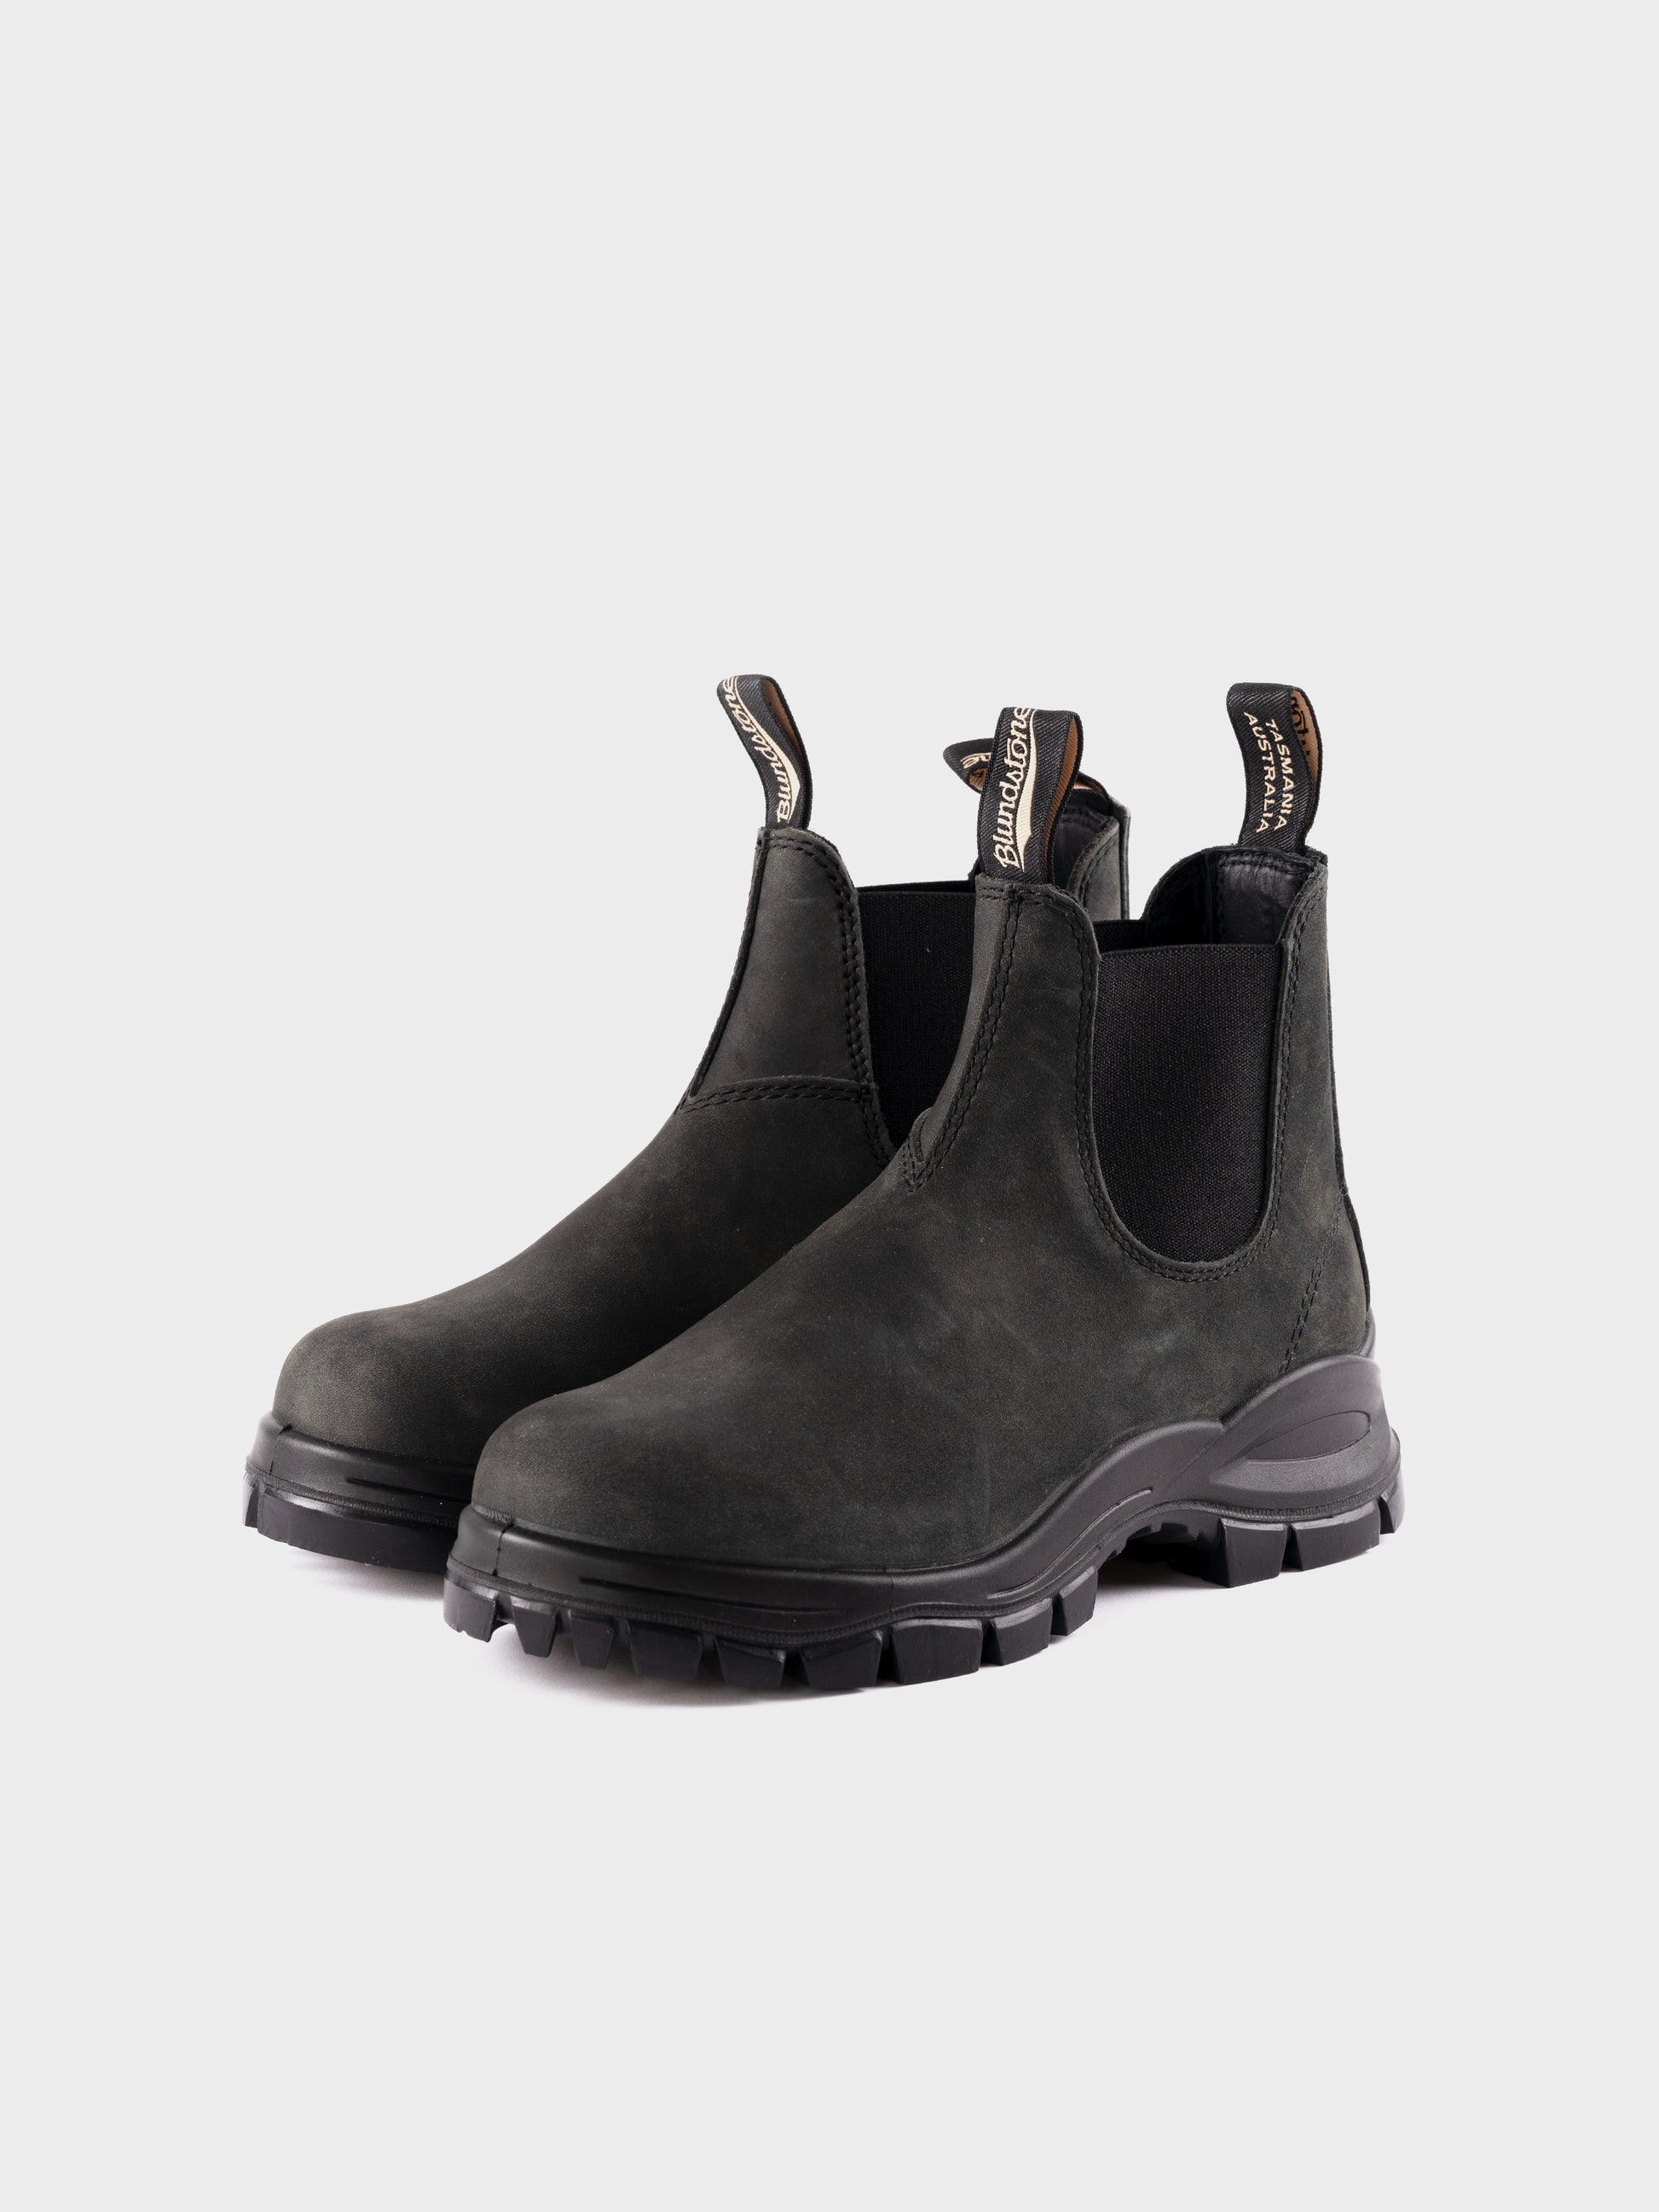 Blundstone Lug Boots - 2238 - Rustic Black Leather